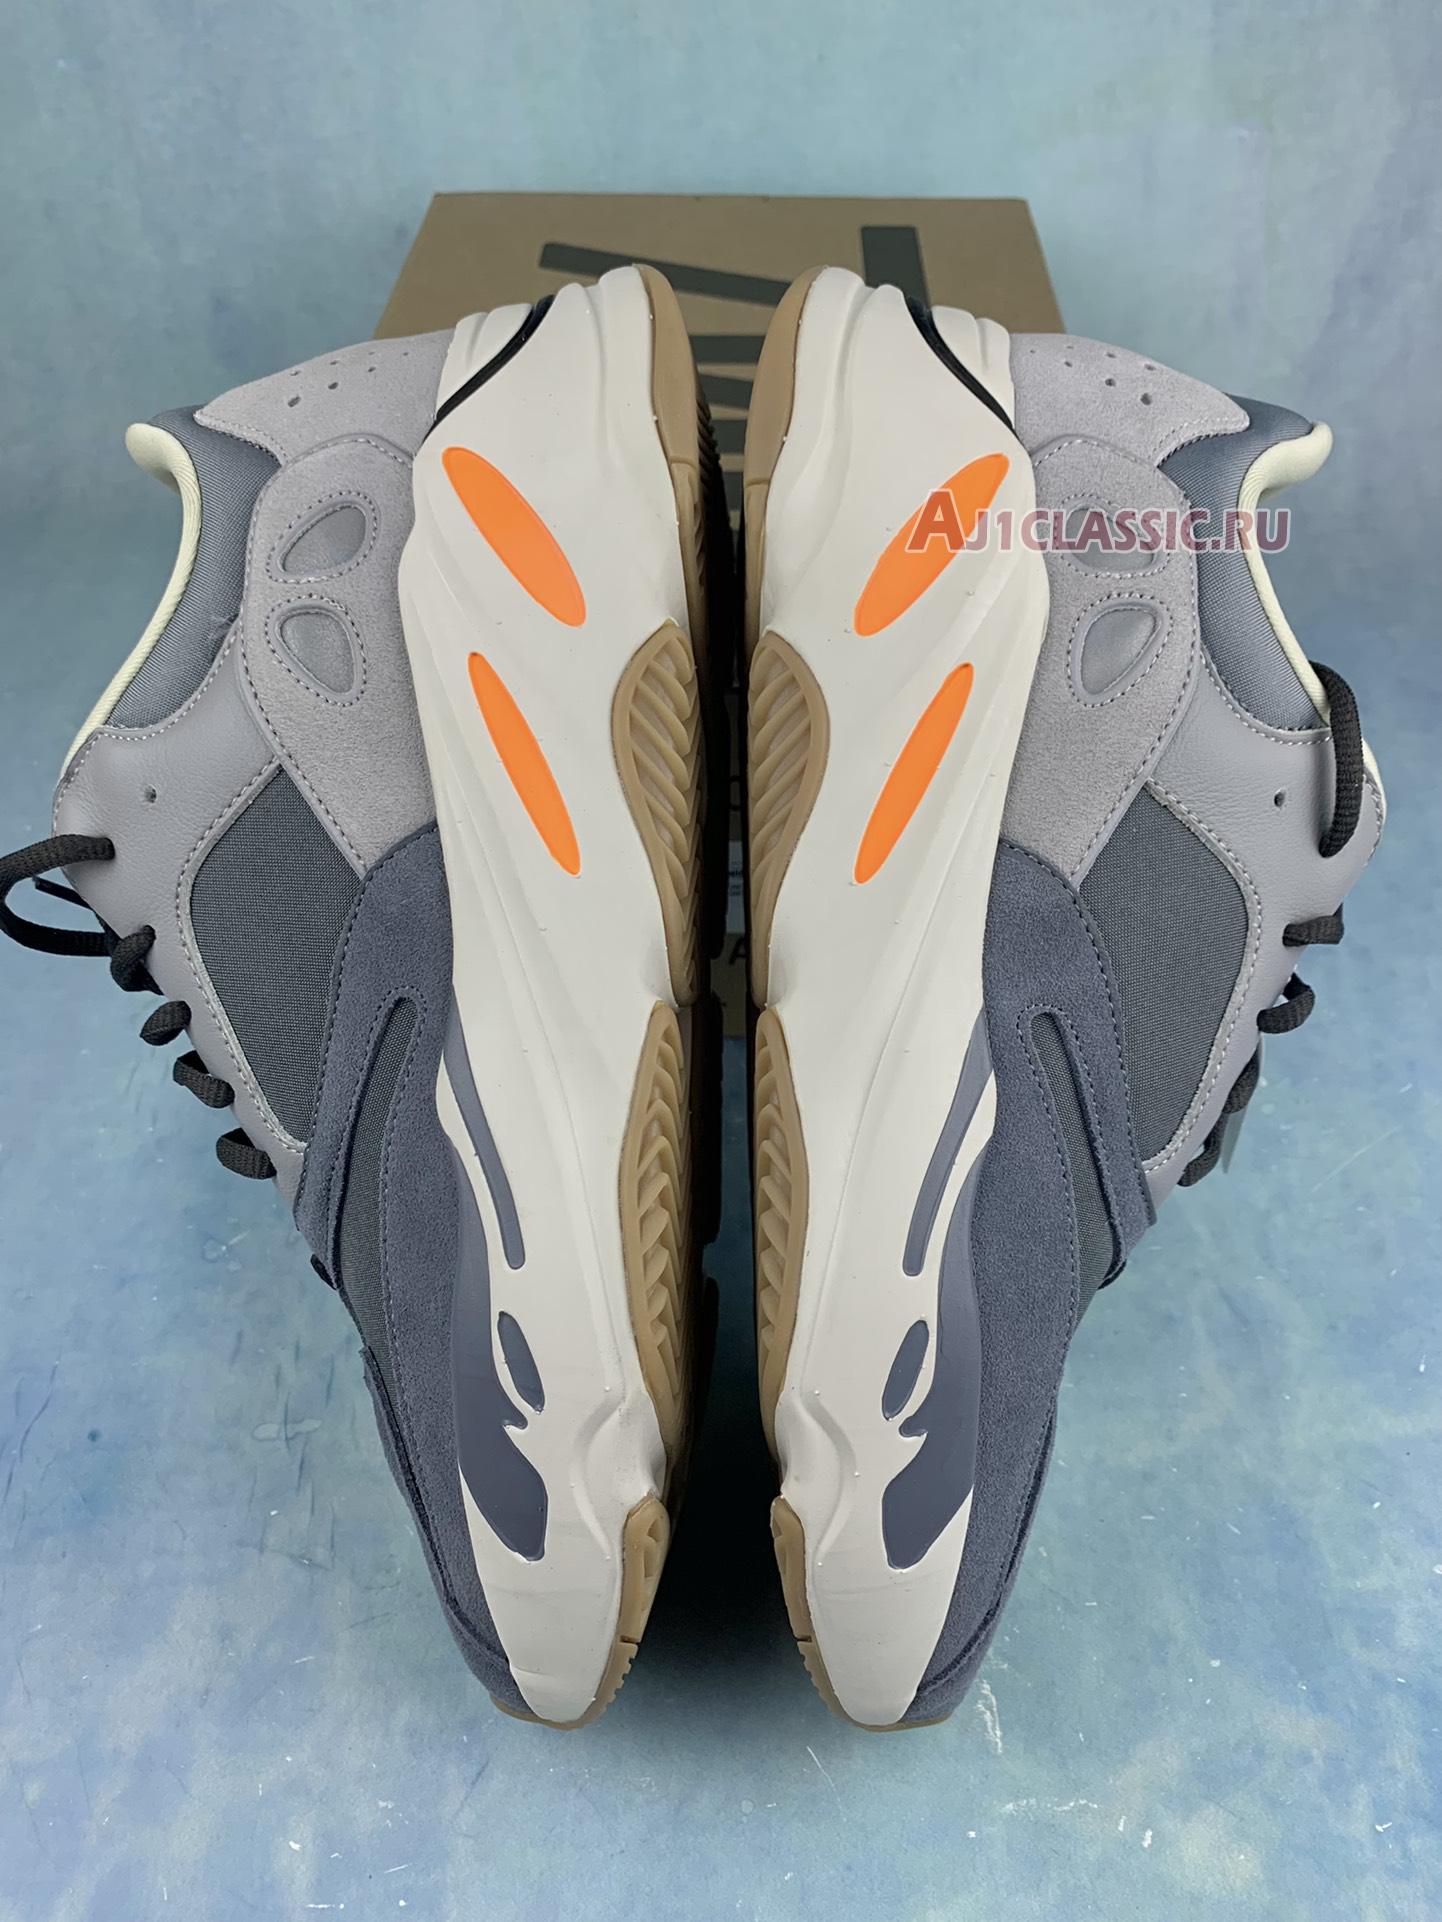 Adidas Yeezy Boost 700 "Magnet" FV9922-2